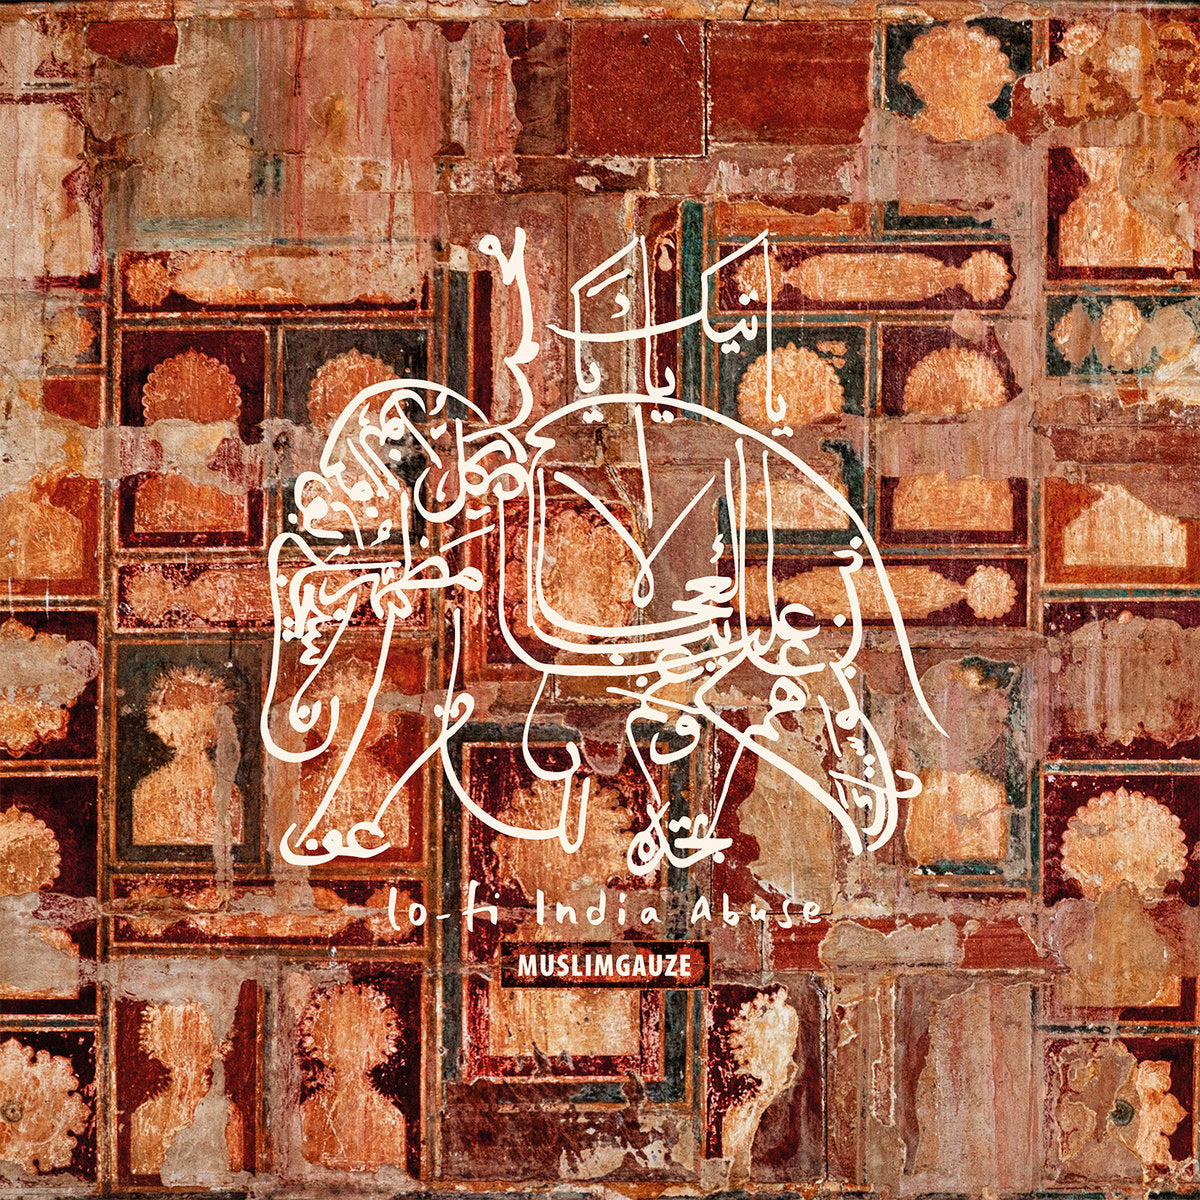 Arcade Sound - Muslimgauze - Lo Fi India Abuse - Picture Disk / LP image